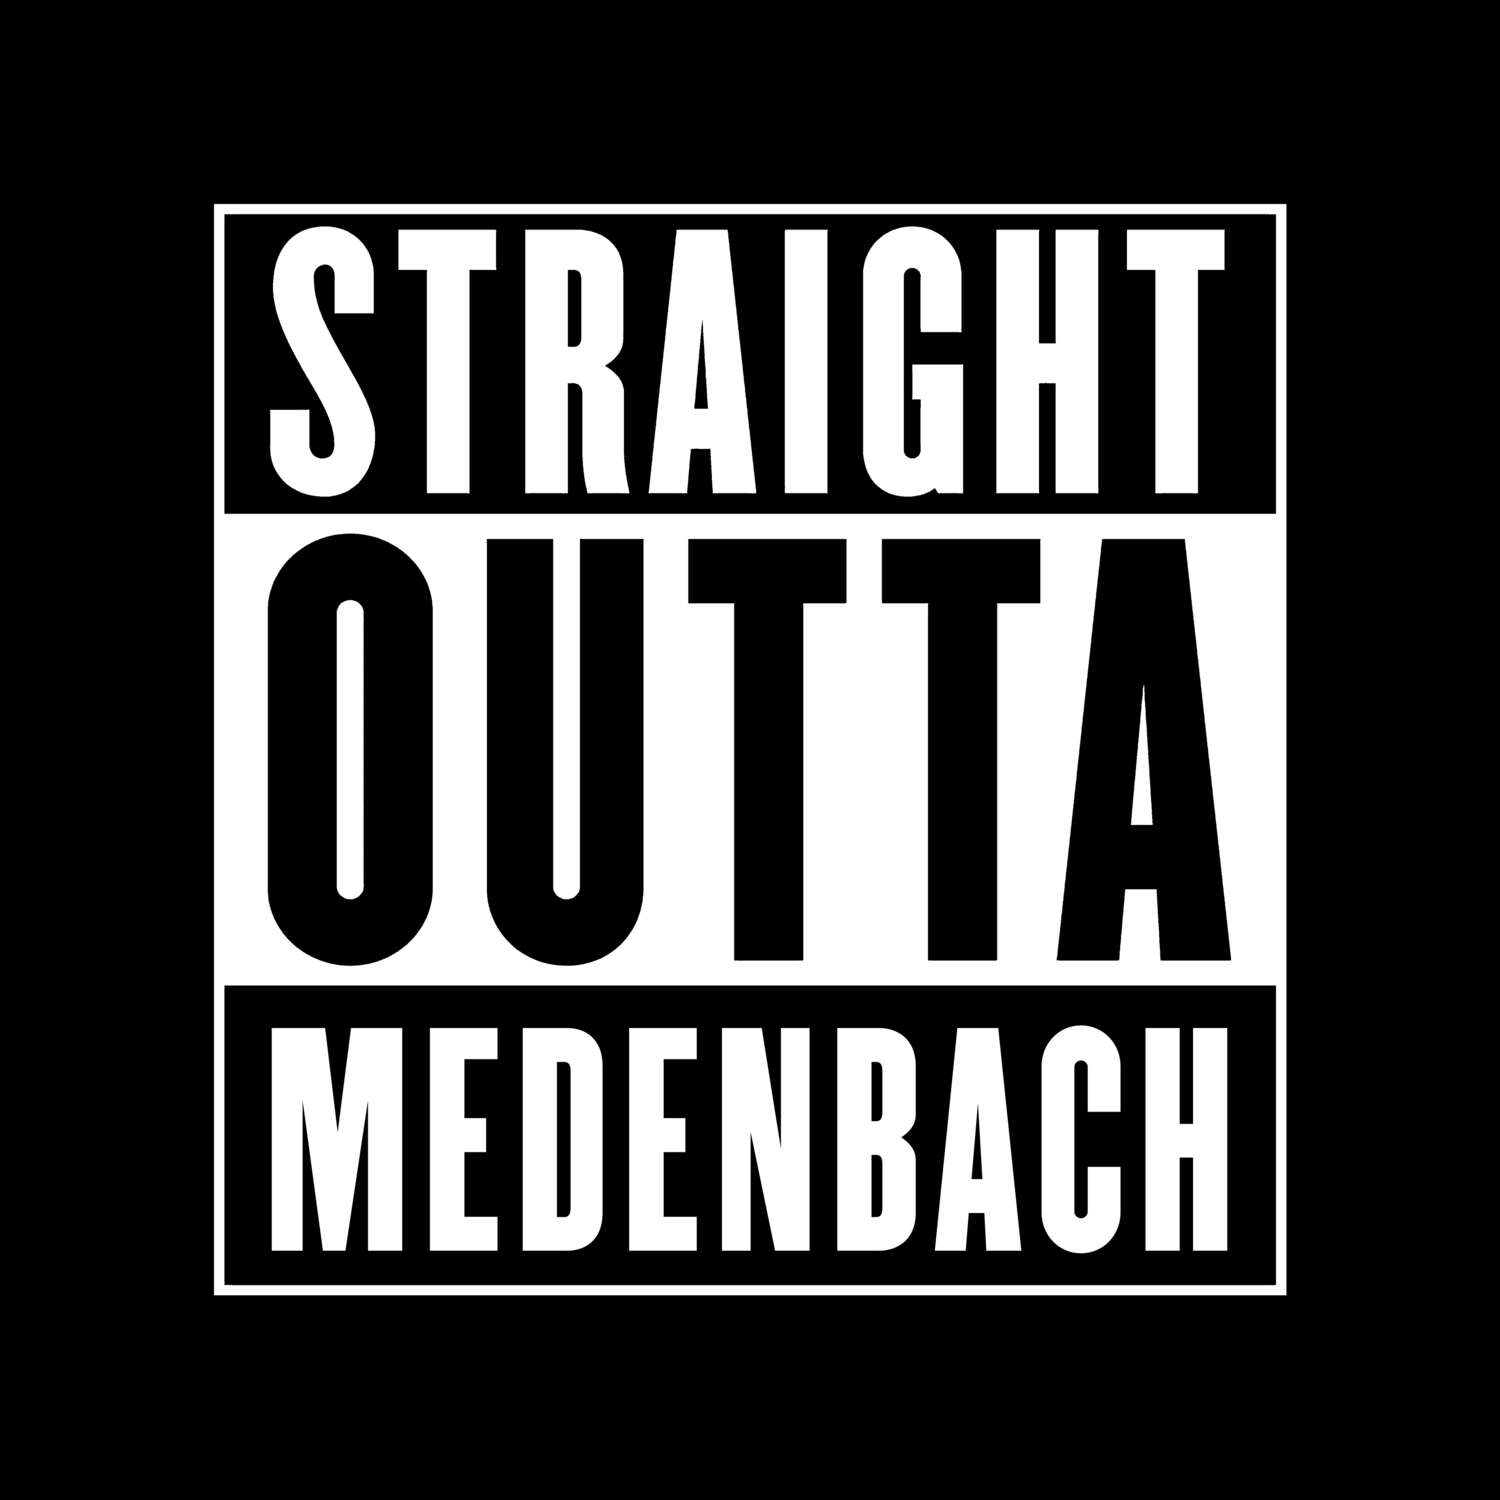 Medenbach T-Shirt »Straight Outta«